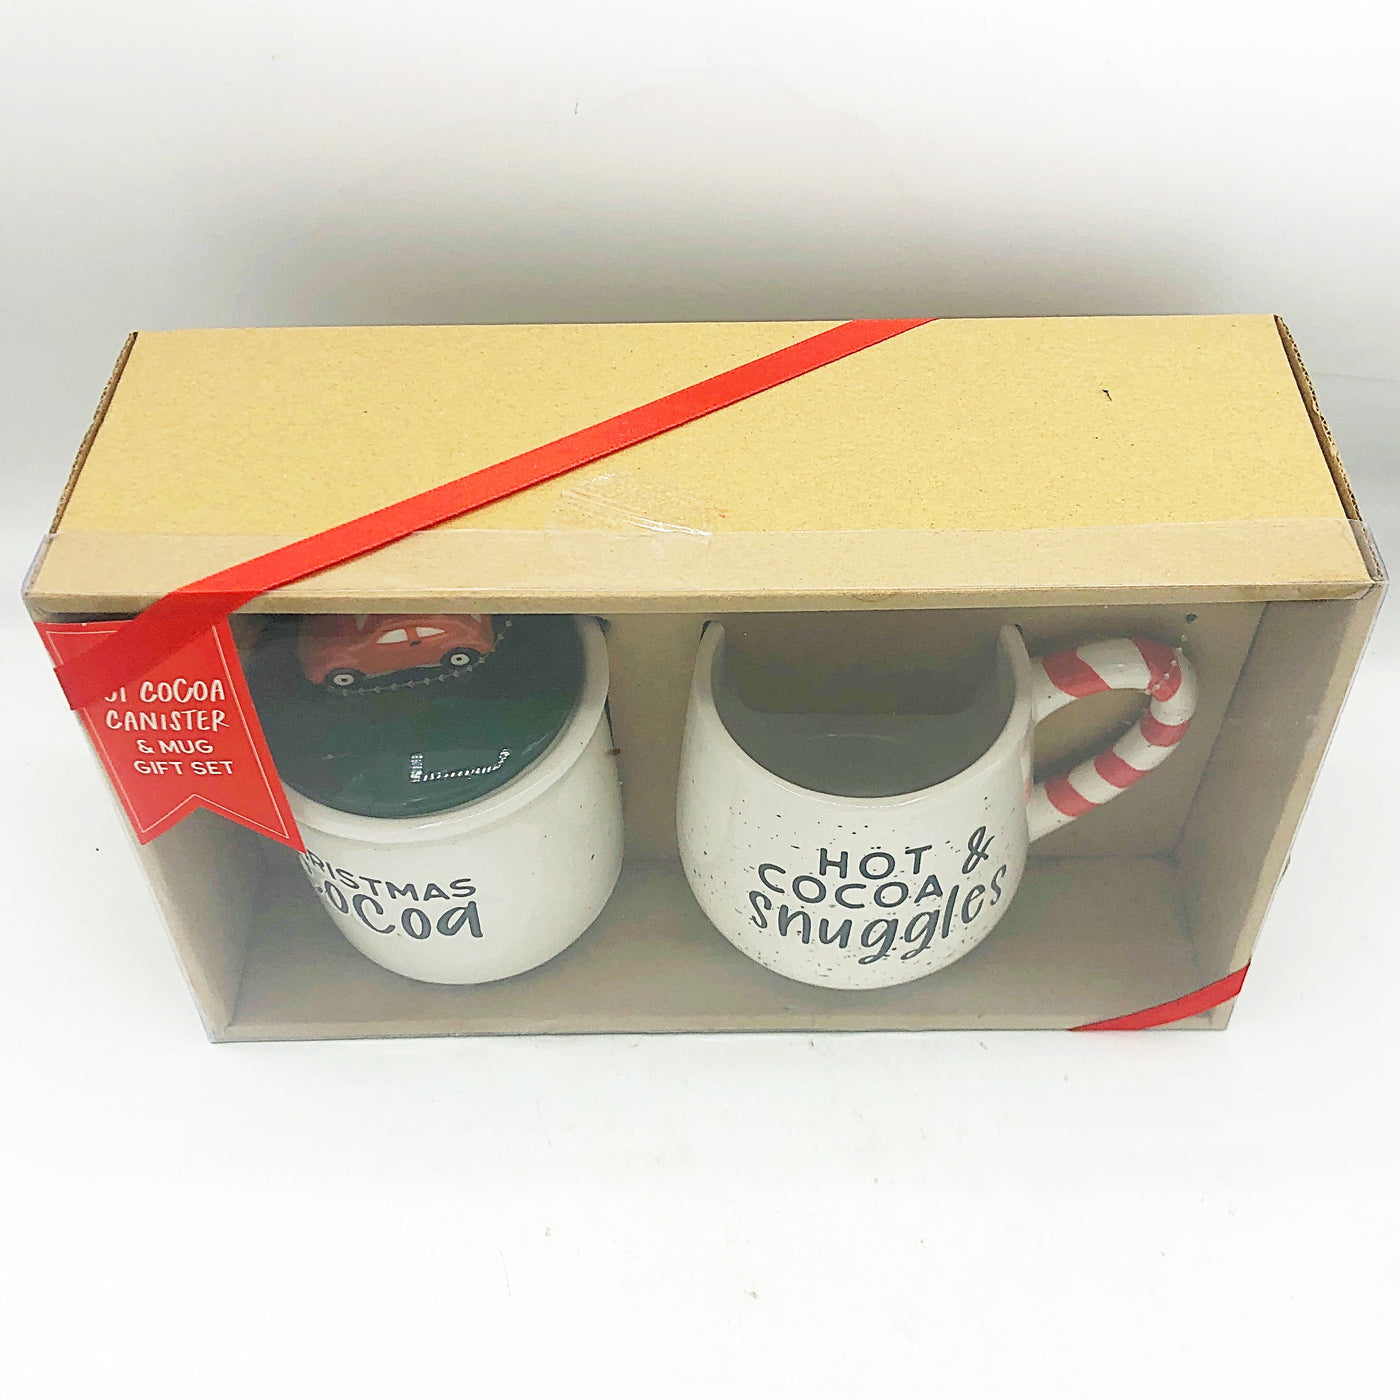 💙 Christmas Hot Cocoa Canister & Hot Cocoa Mug Gift Set